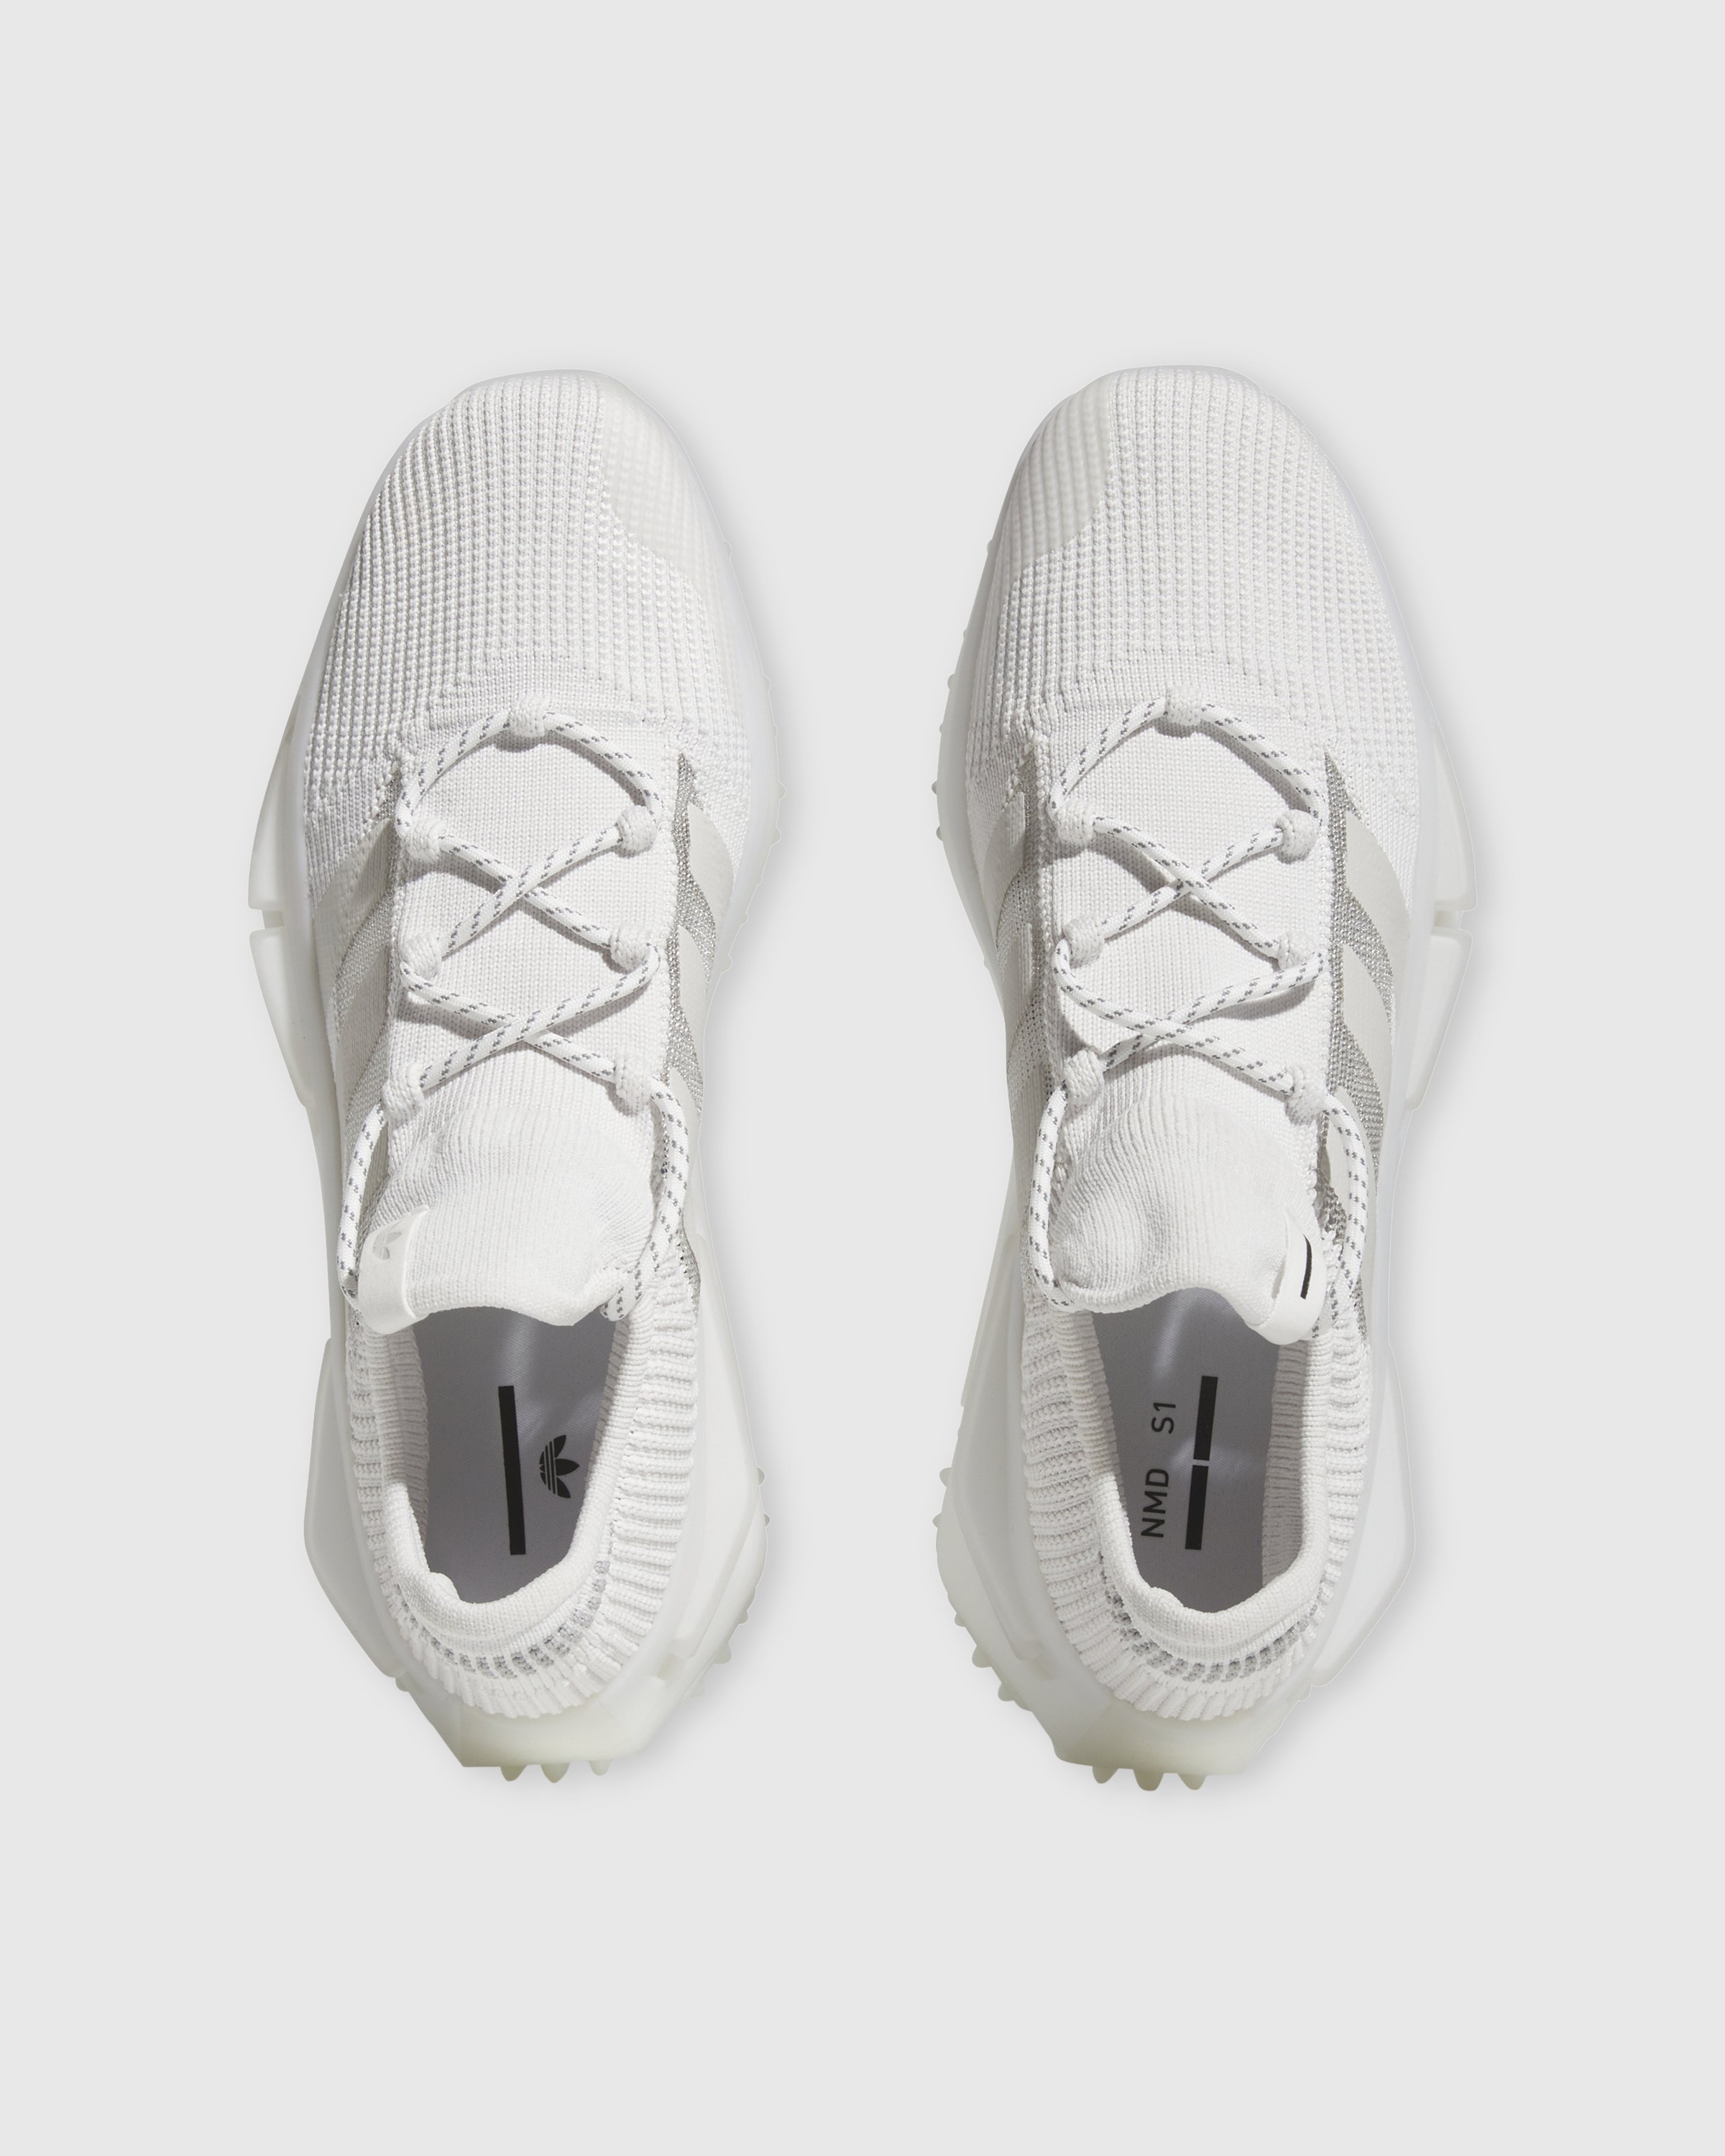 Adidas - NMD S1 - Footwear - White - Image 4